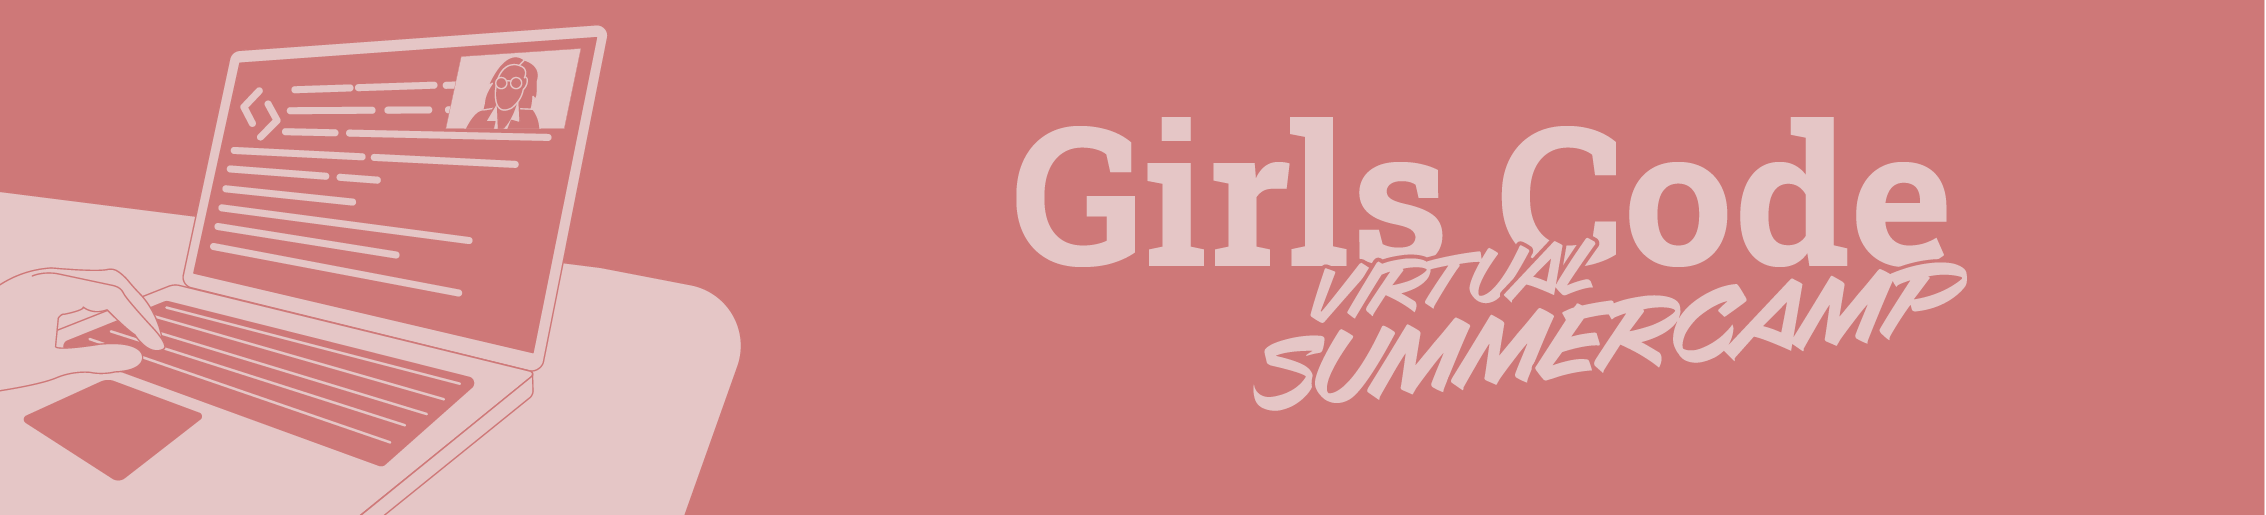 Girls Code Virtual Summercamp